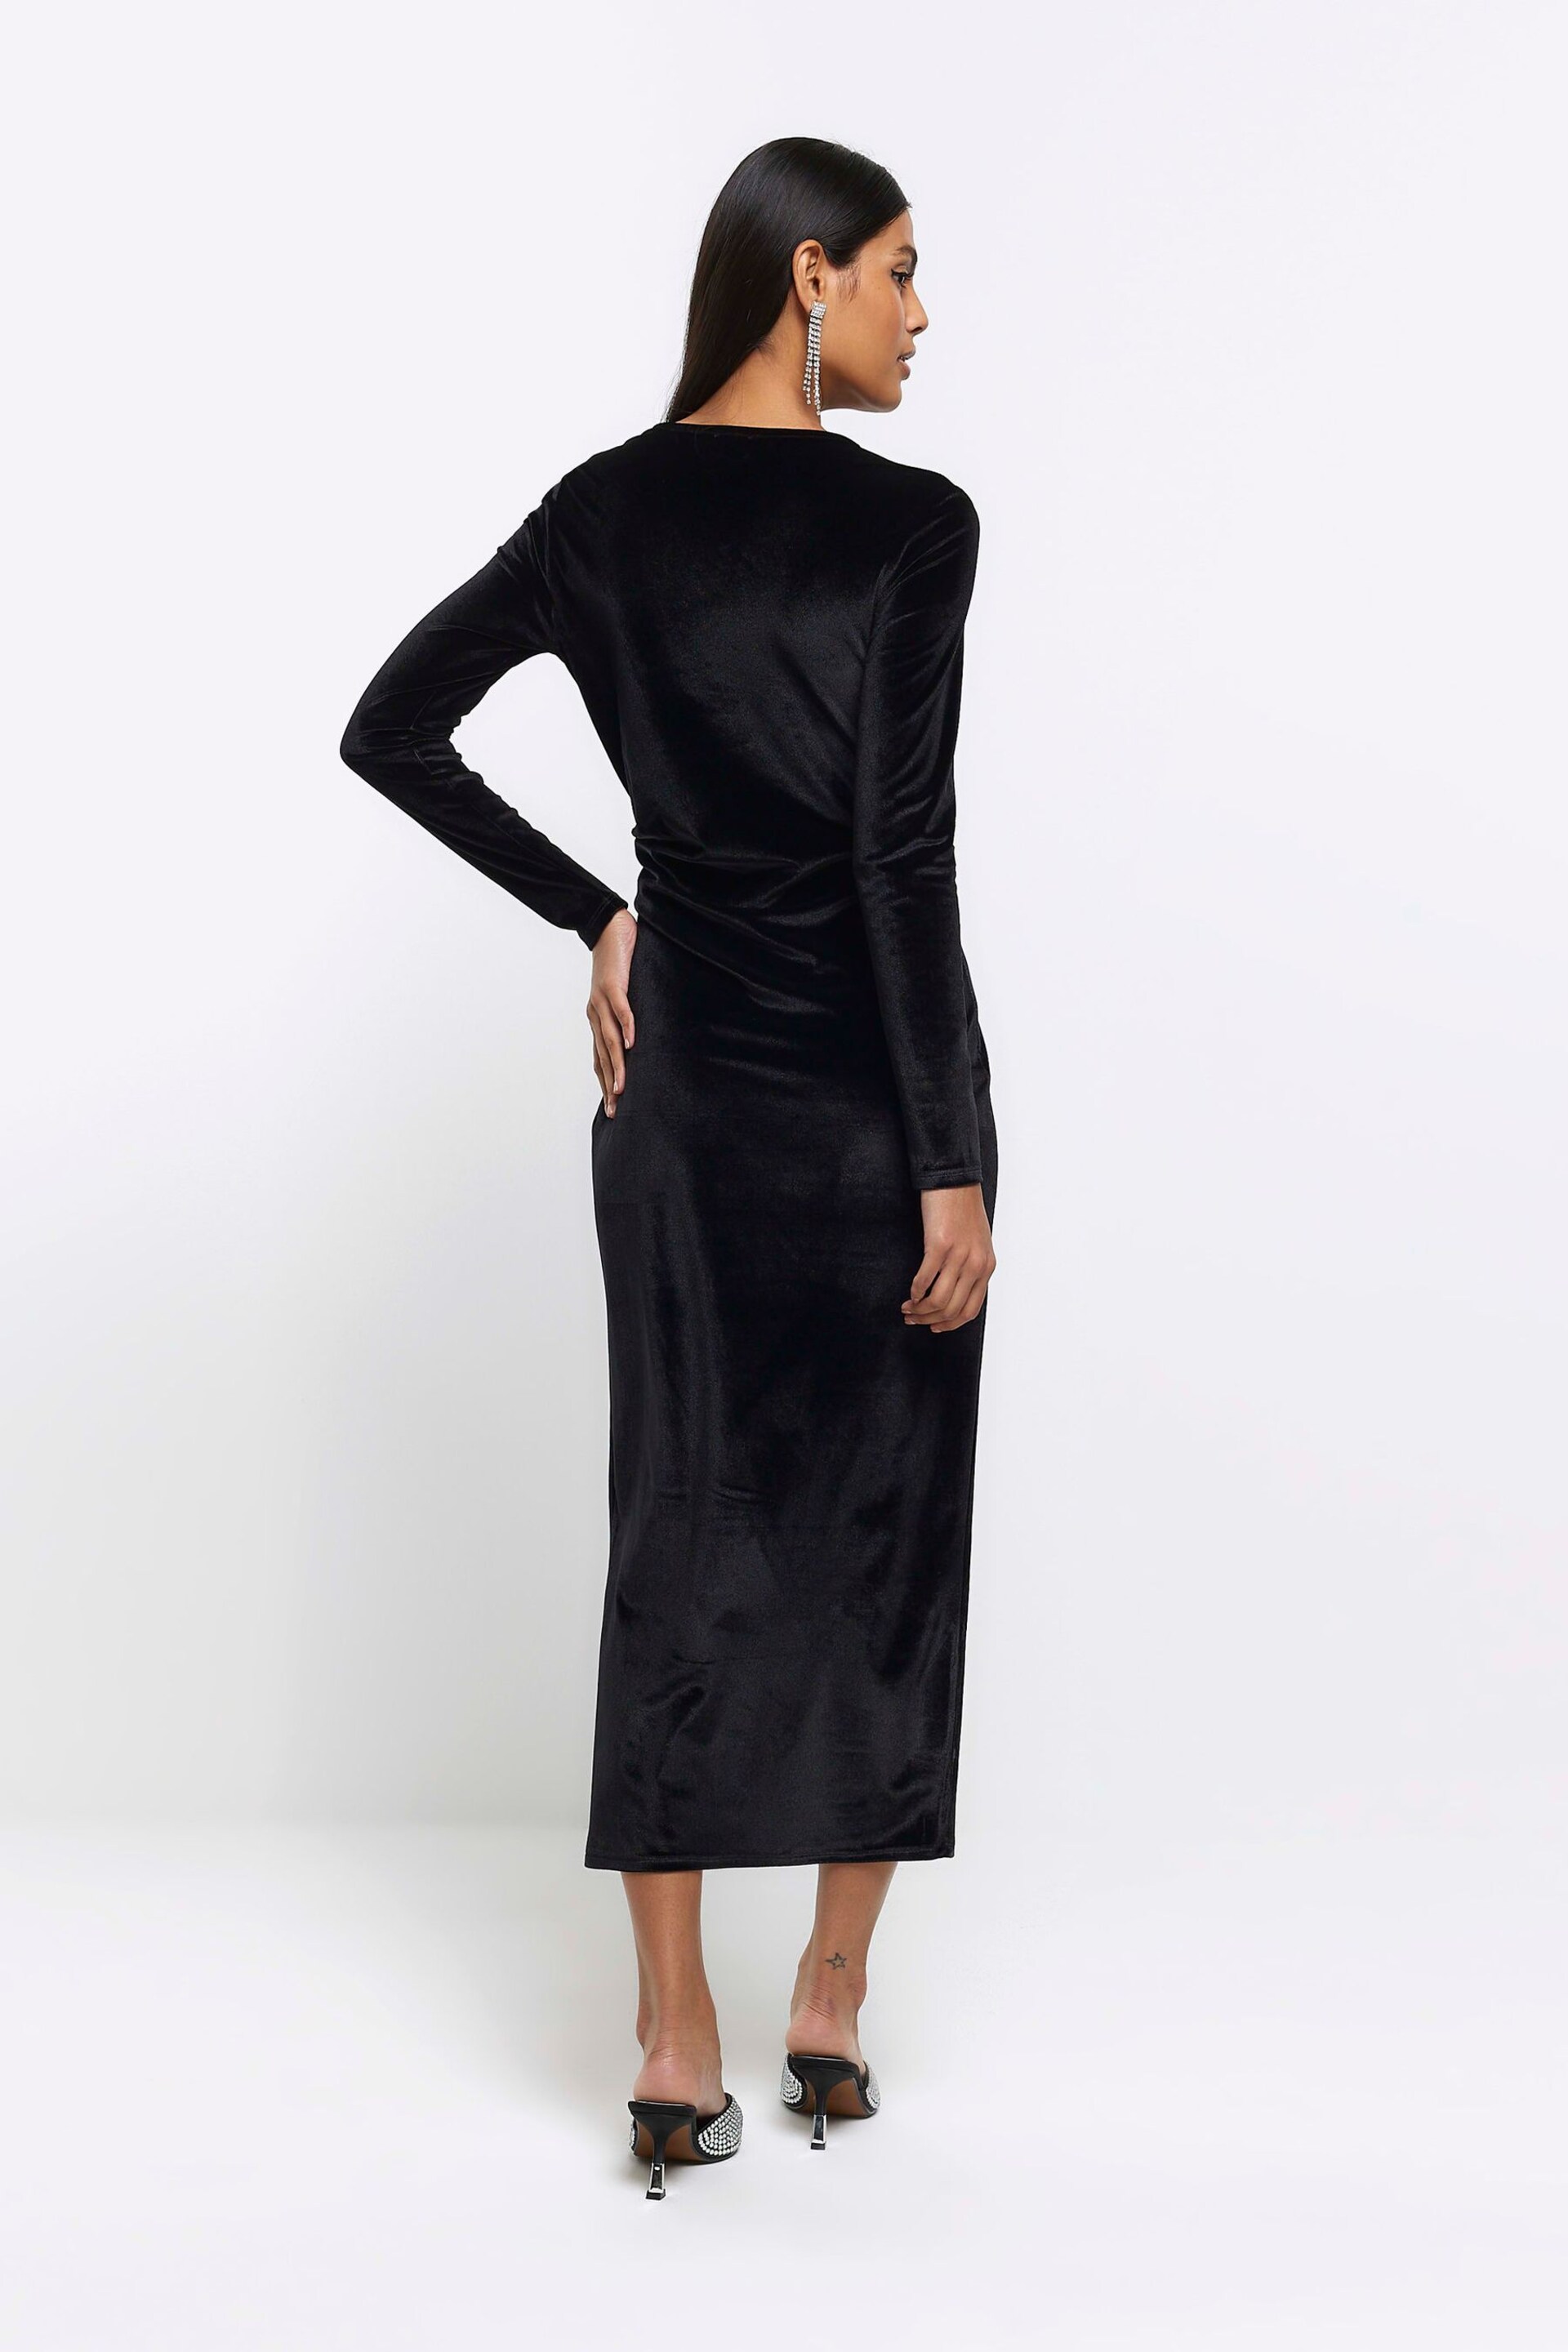 River Island Black Long Sleeves Twist Velvet Midi Dress - Image 2 of 4